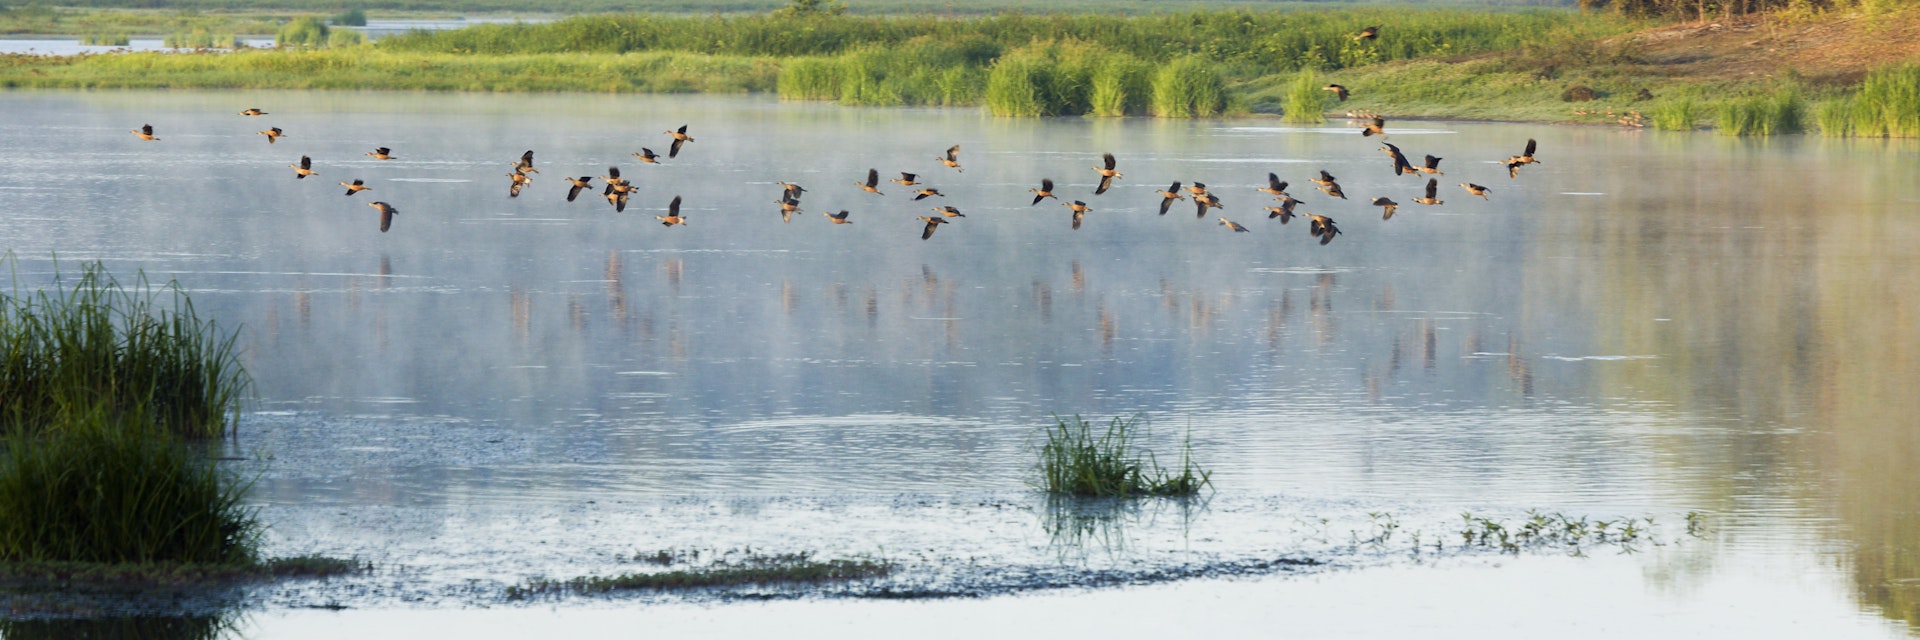 Flock of Whistling Ducks over Crocodile Swamp.